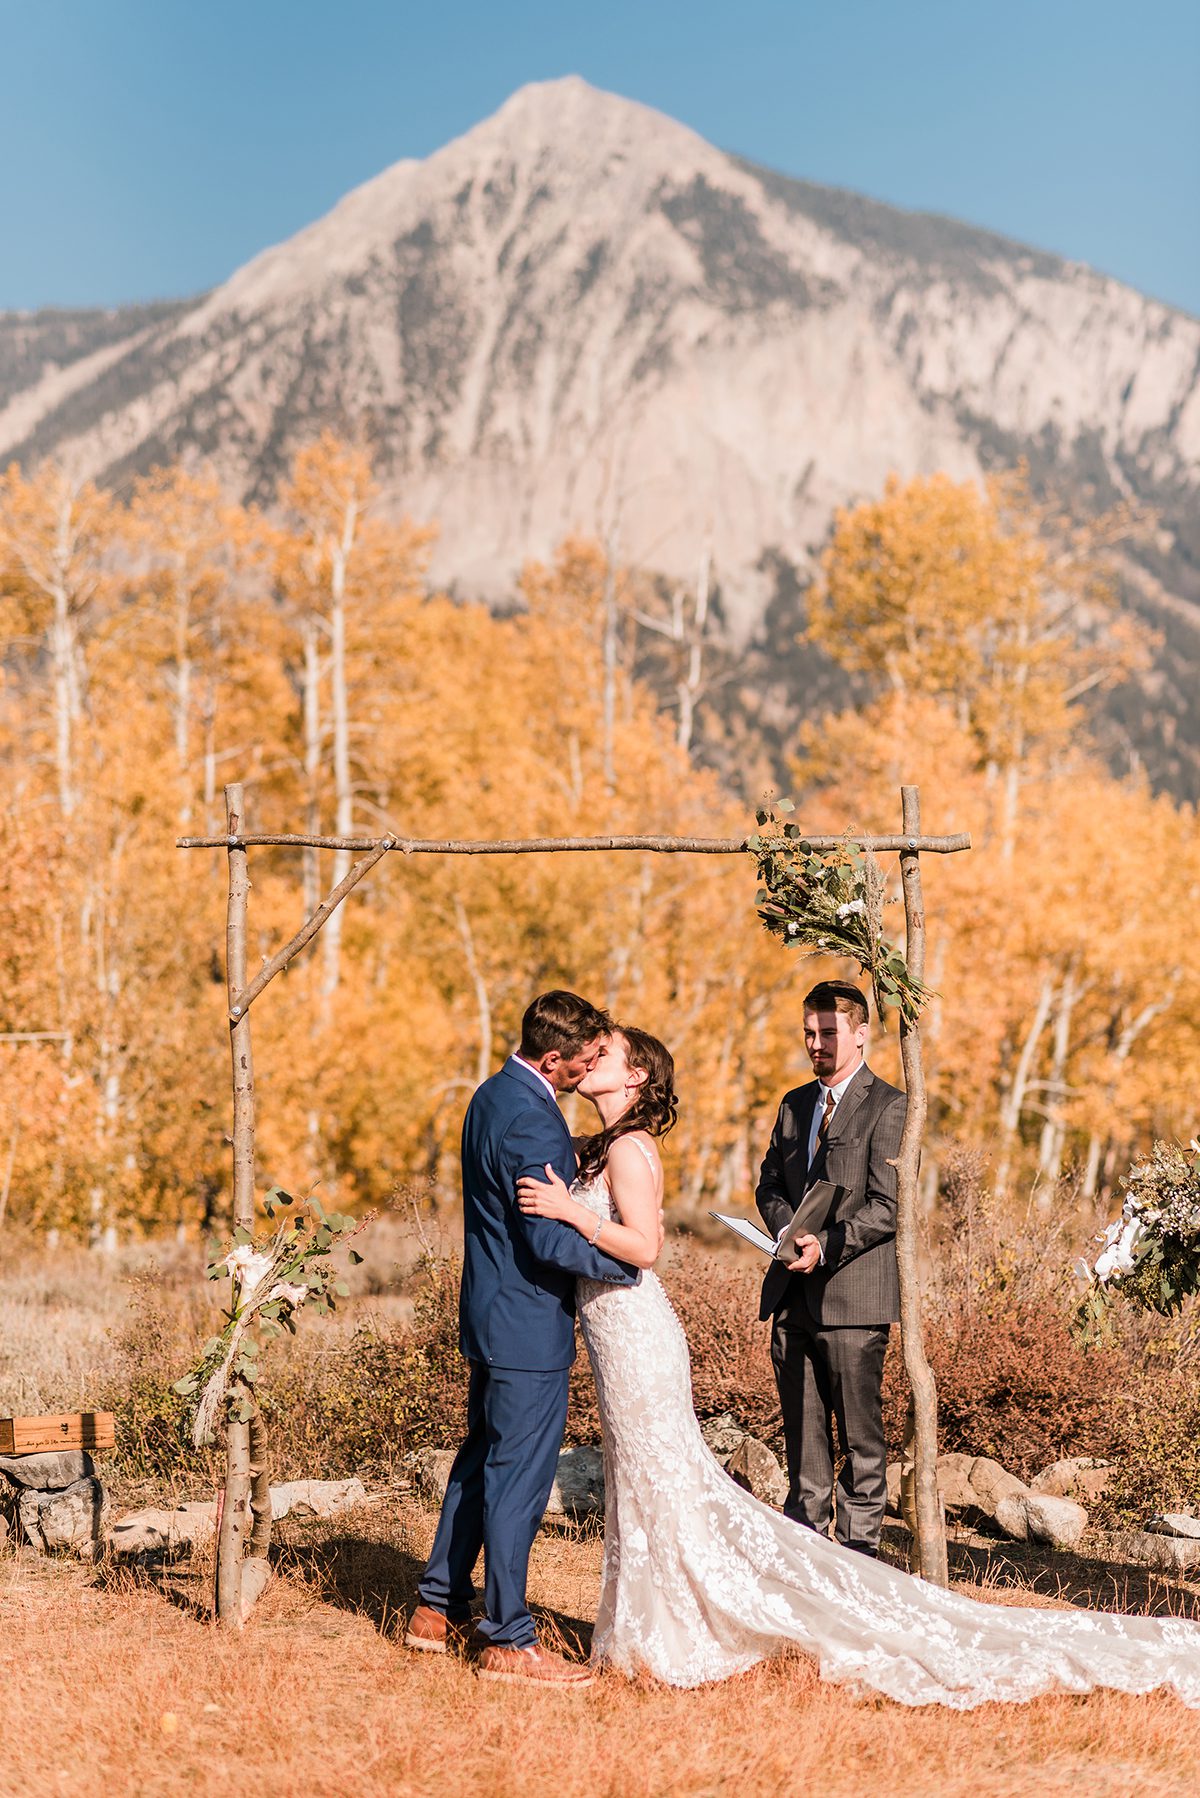 Trista & Daren | Crested Butte Wedding at the Woods Walk